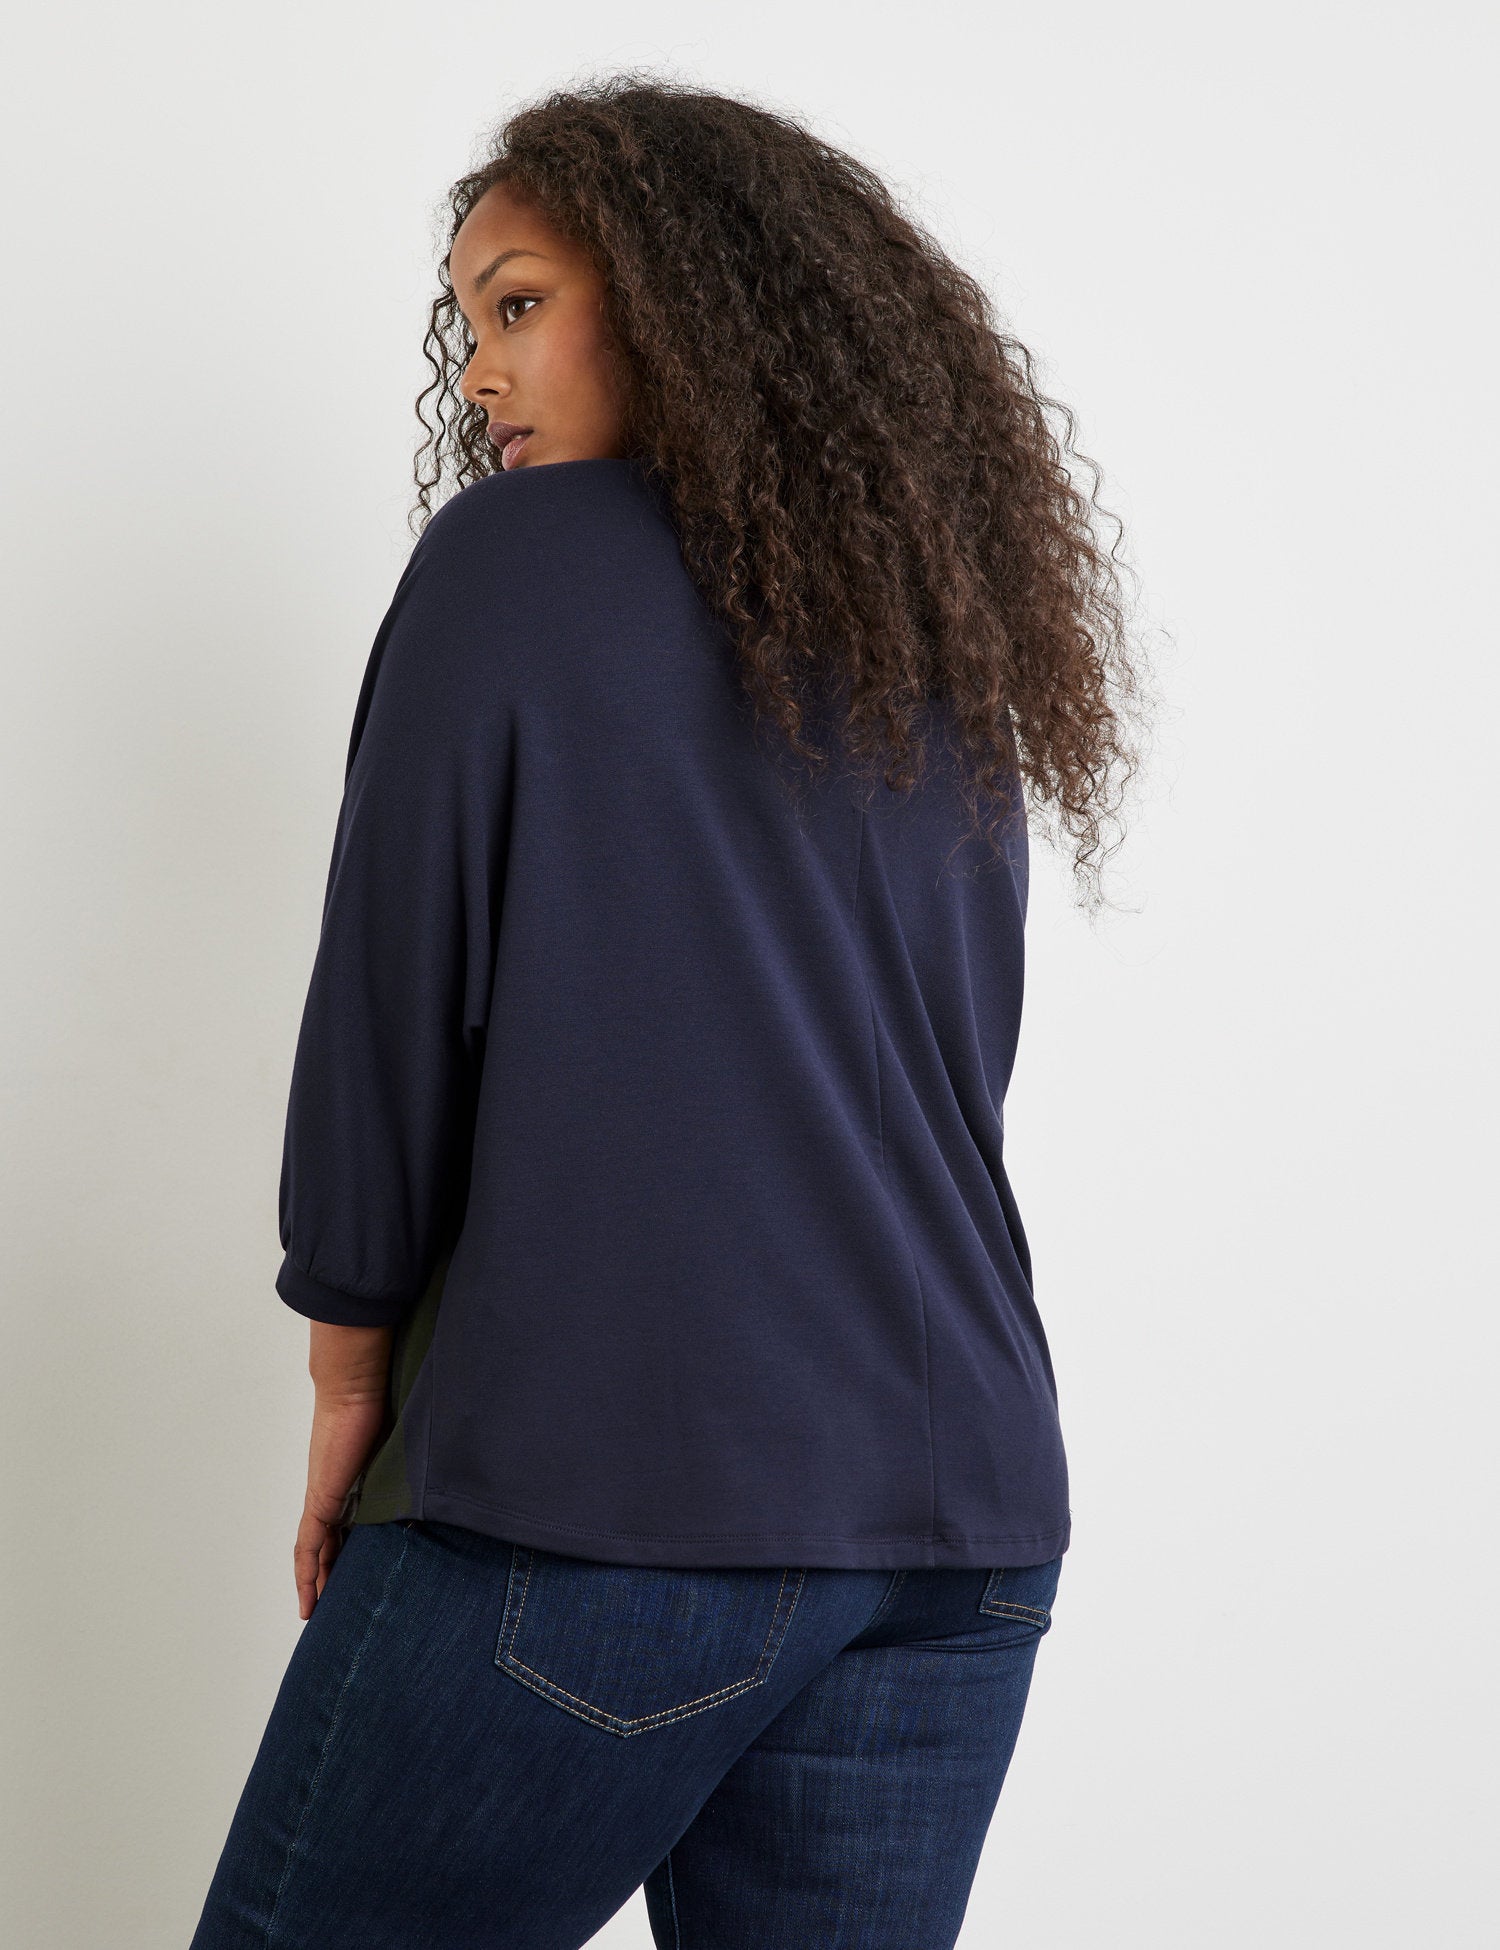 Sweatshirt With Wide 3-4-Length Sleeves_371250-26414_8452_06